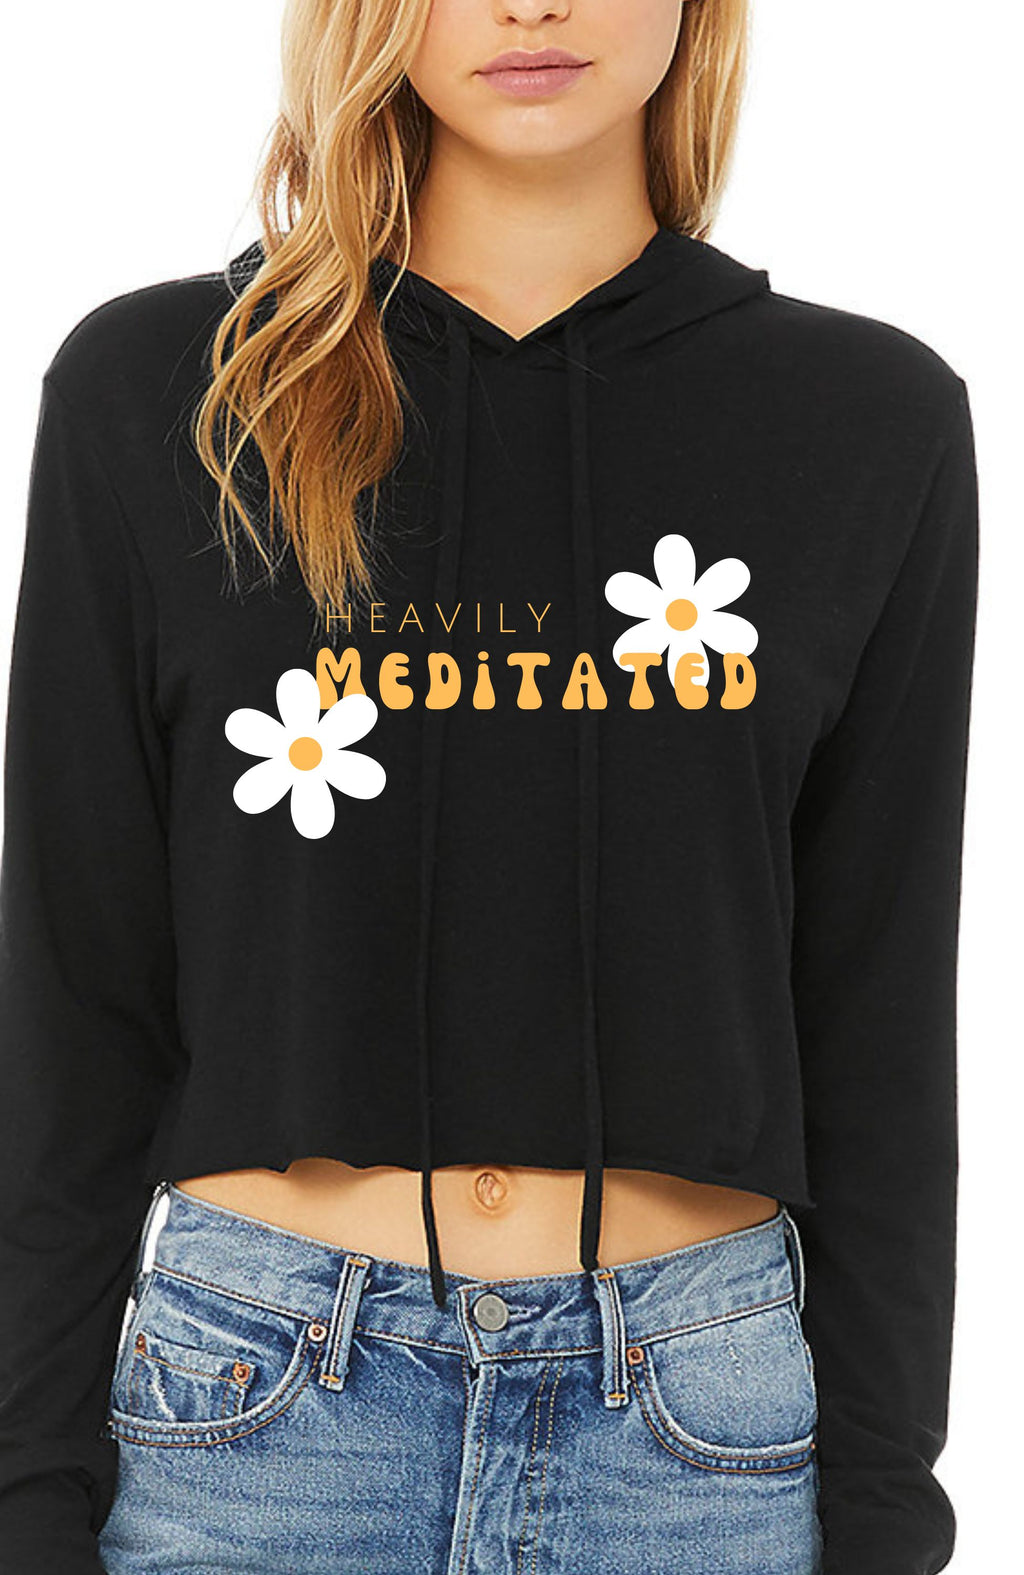 Shop Sweat Society Activewear - Heavily Meditated - Yoga Hooded Crop